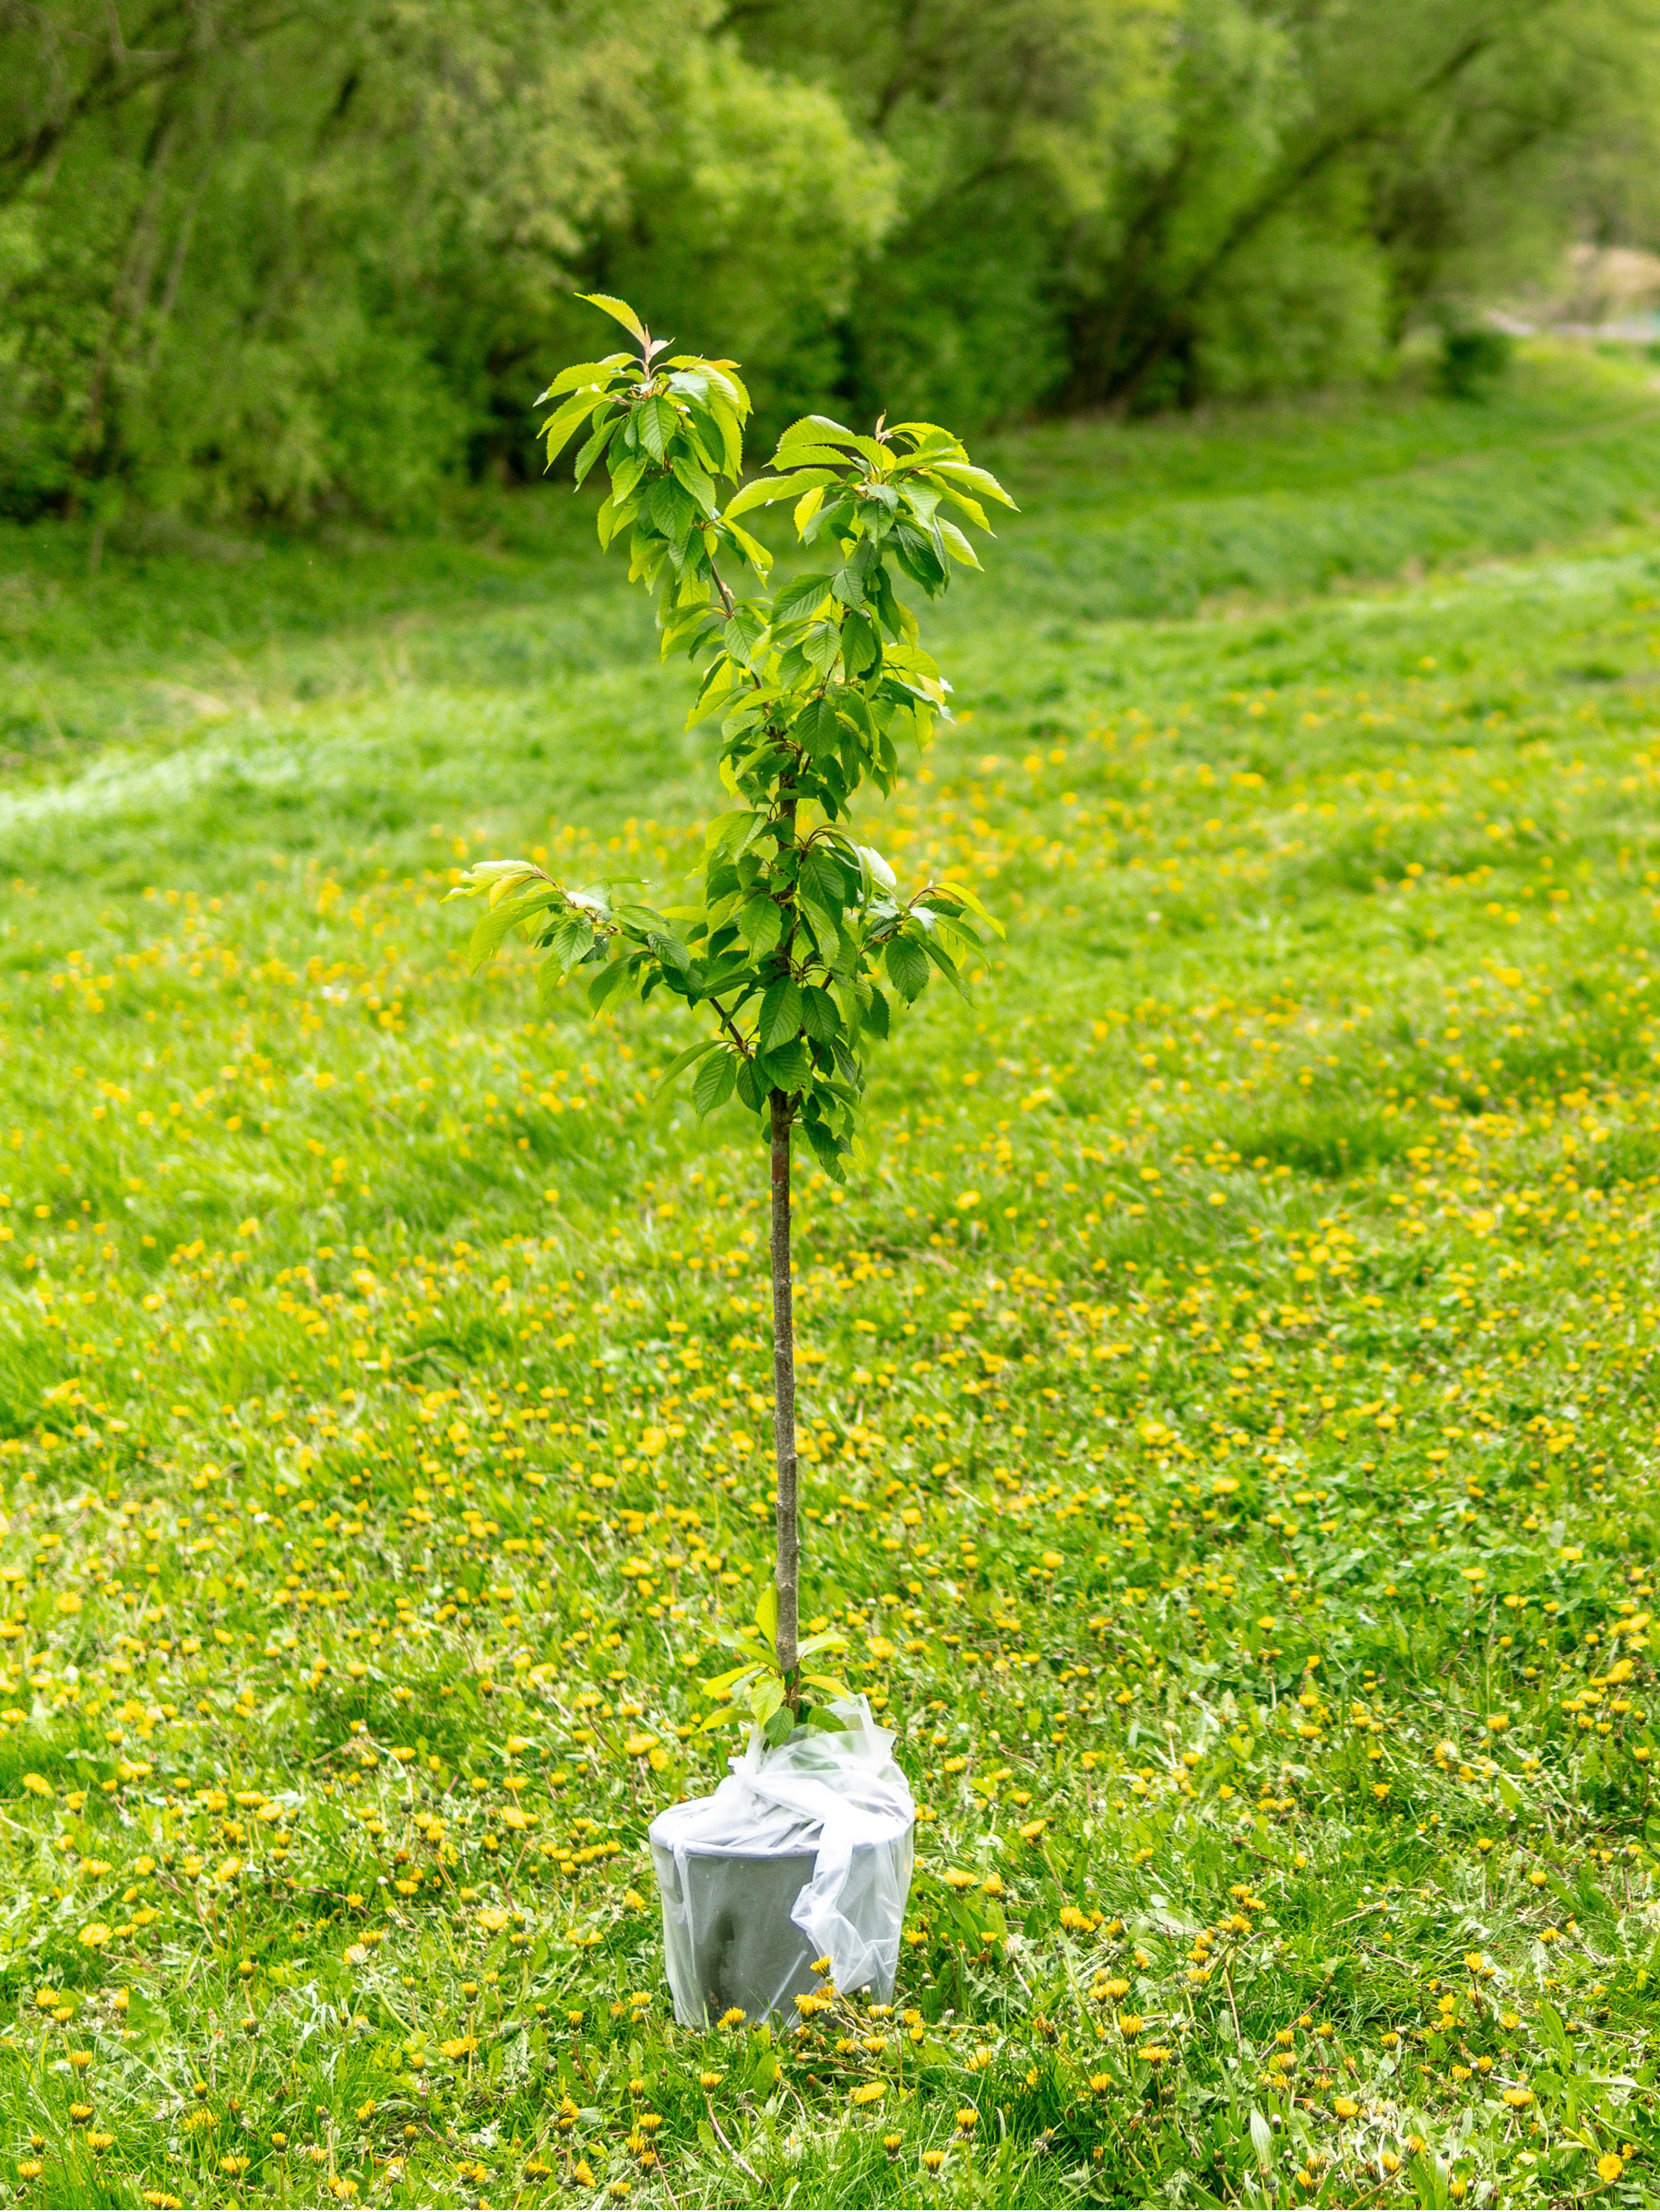 Tree - Tree planting